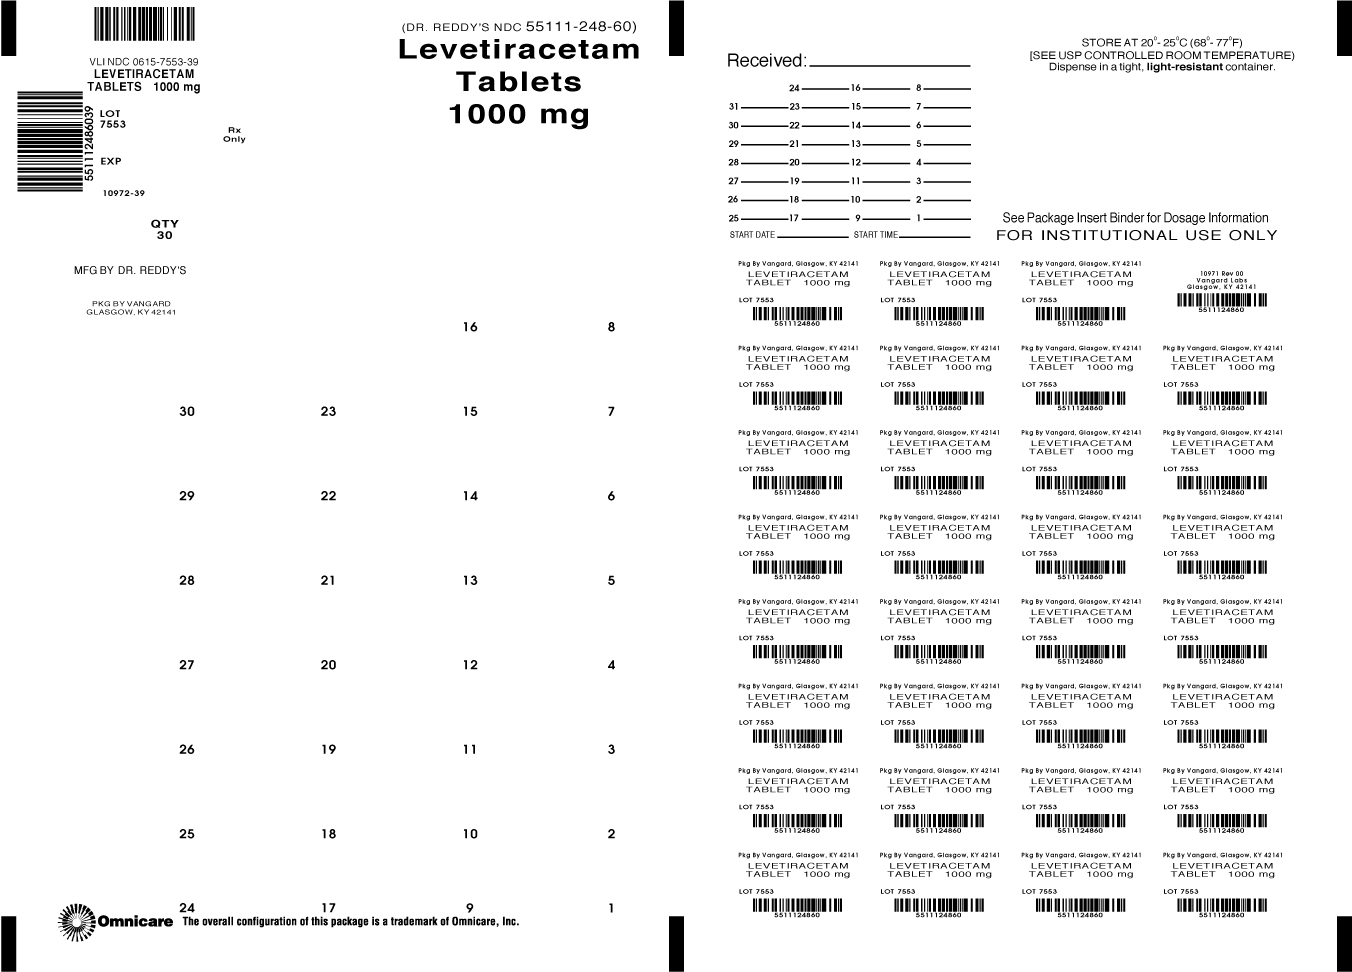 Principal Display Panel-Levetiracetam Tablets